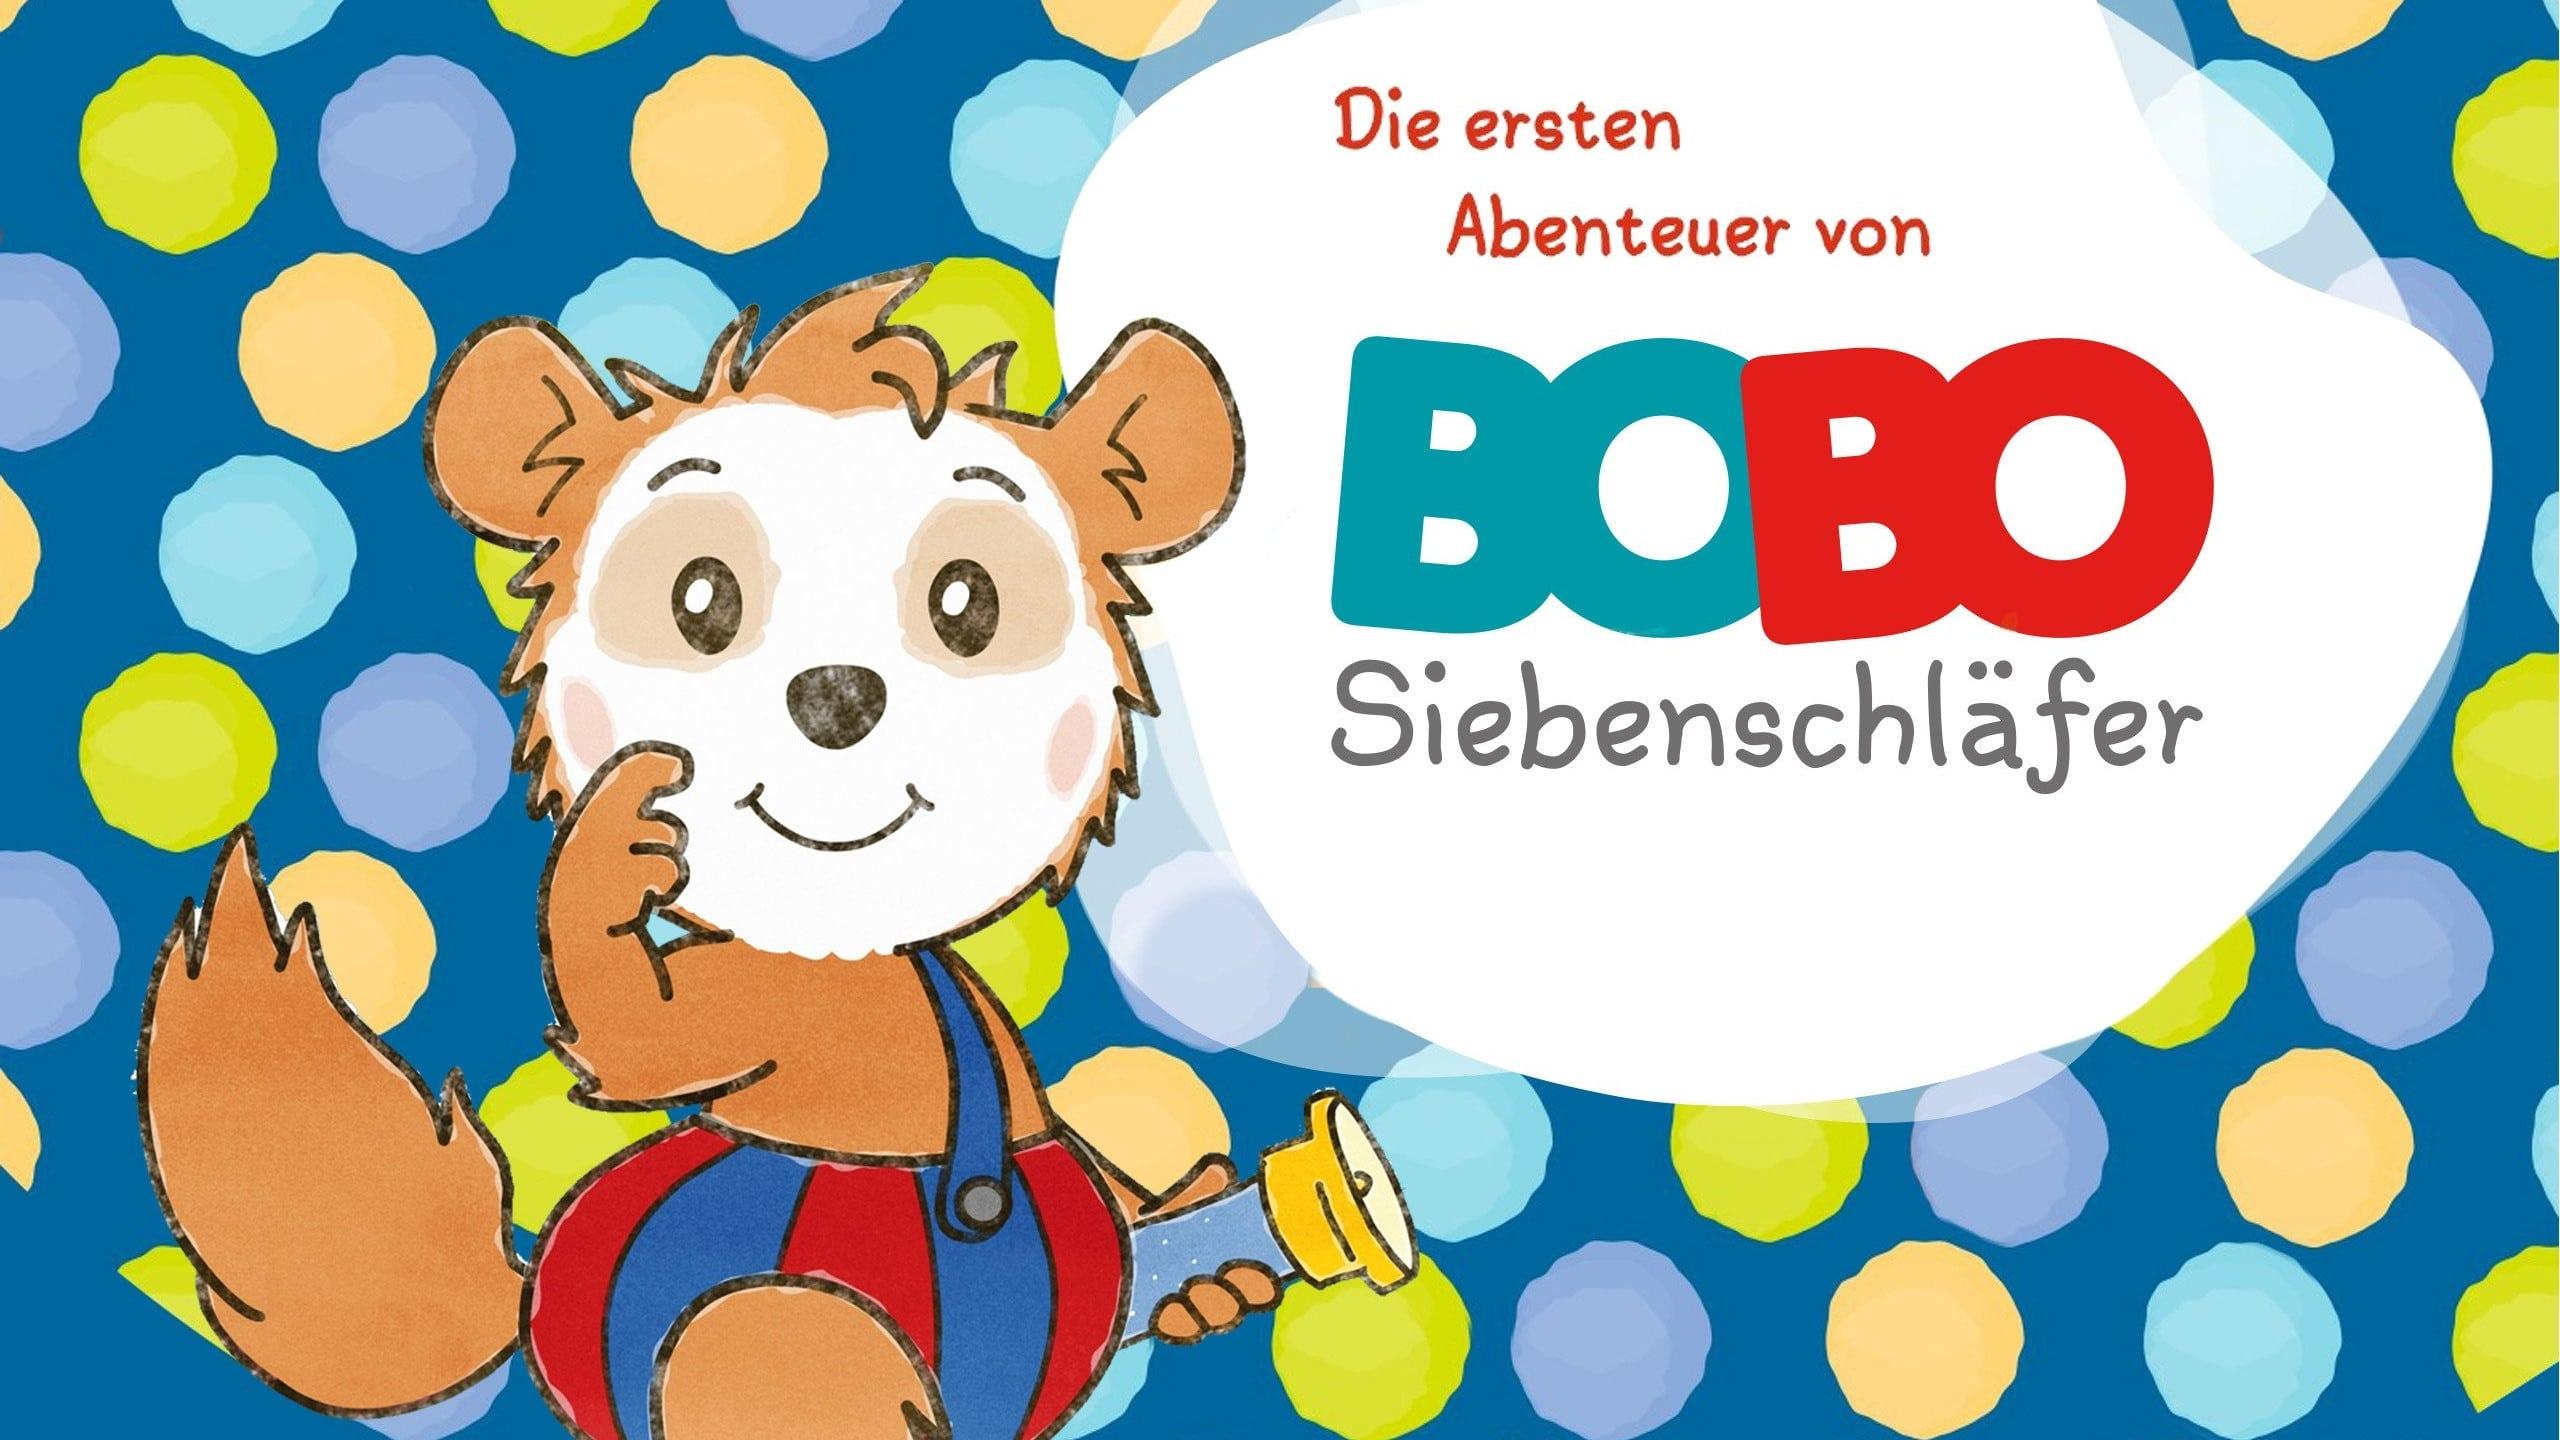 Bobo Siebenschläfer backdrop